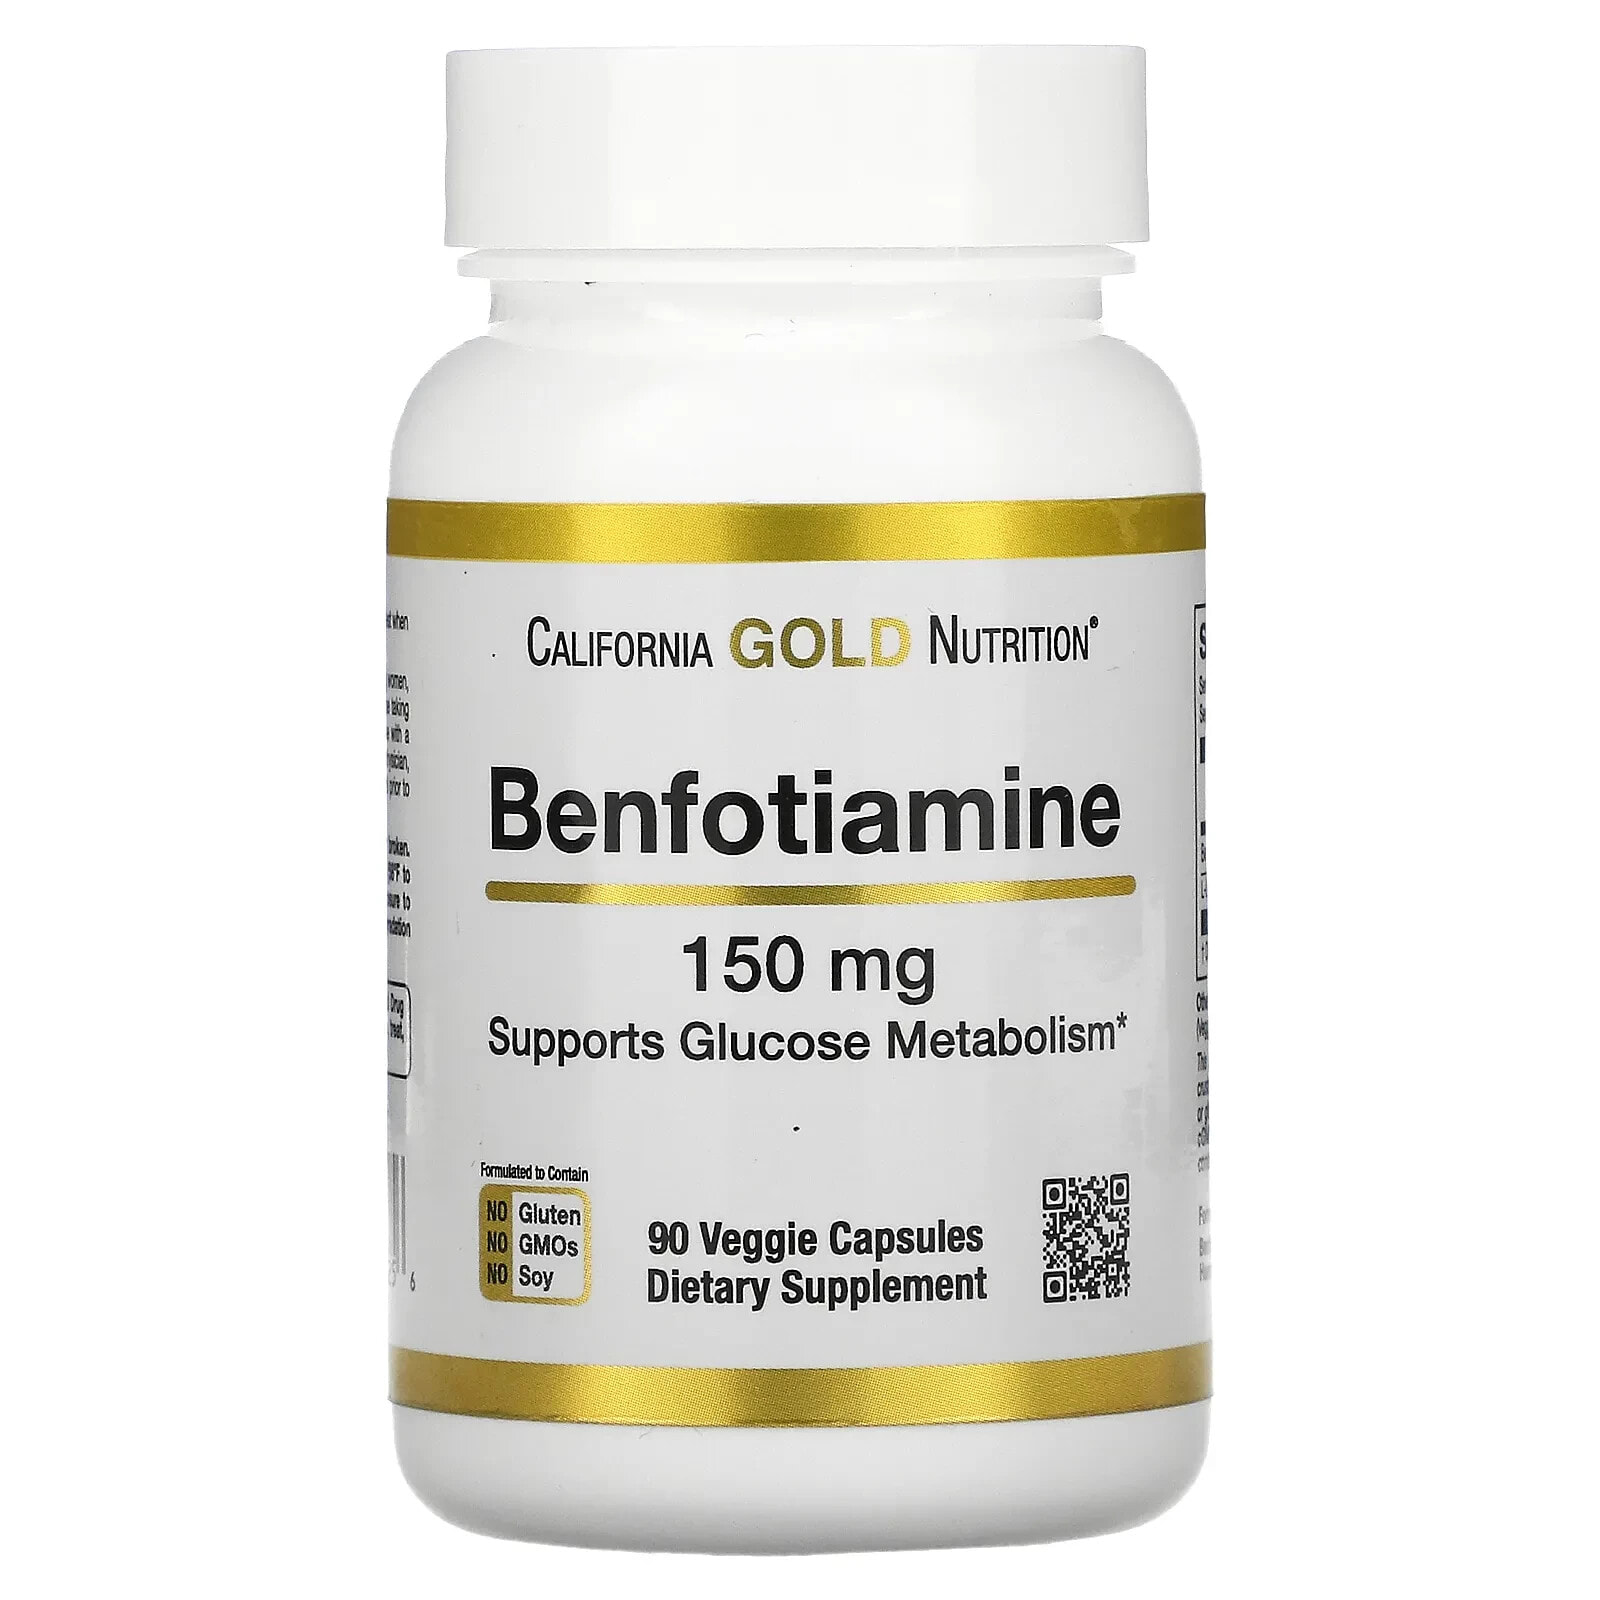 Benfotiamine, 300 mg, 30 Veggie Capsules